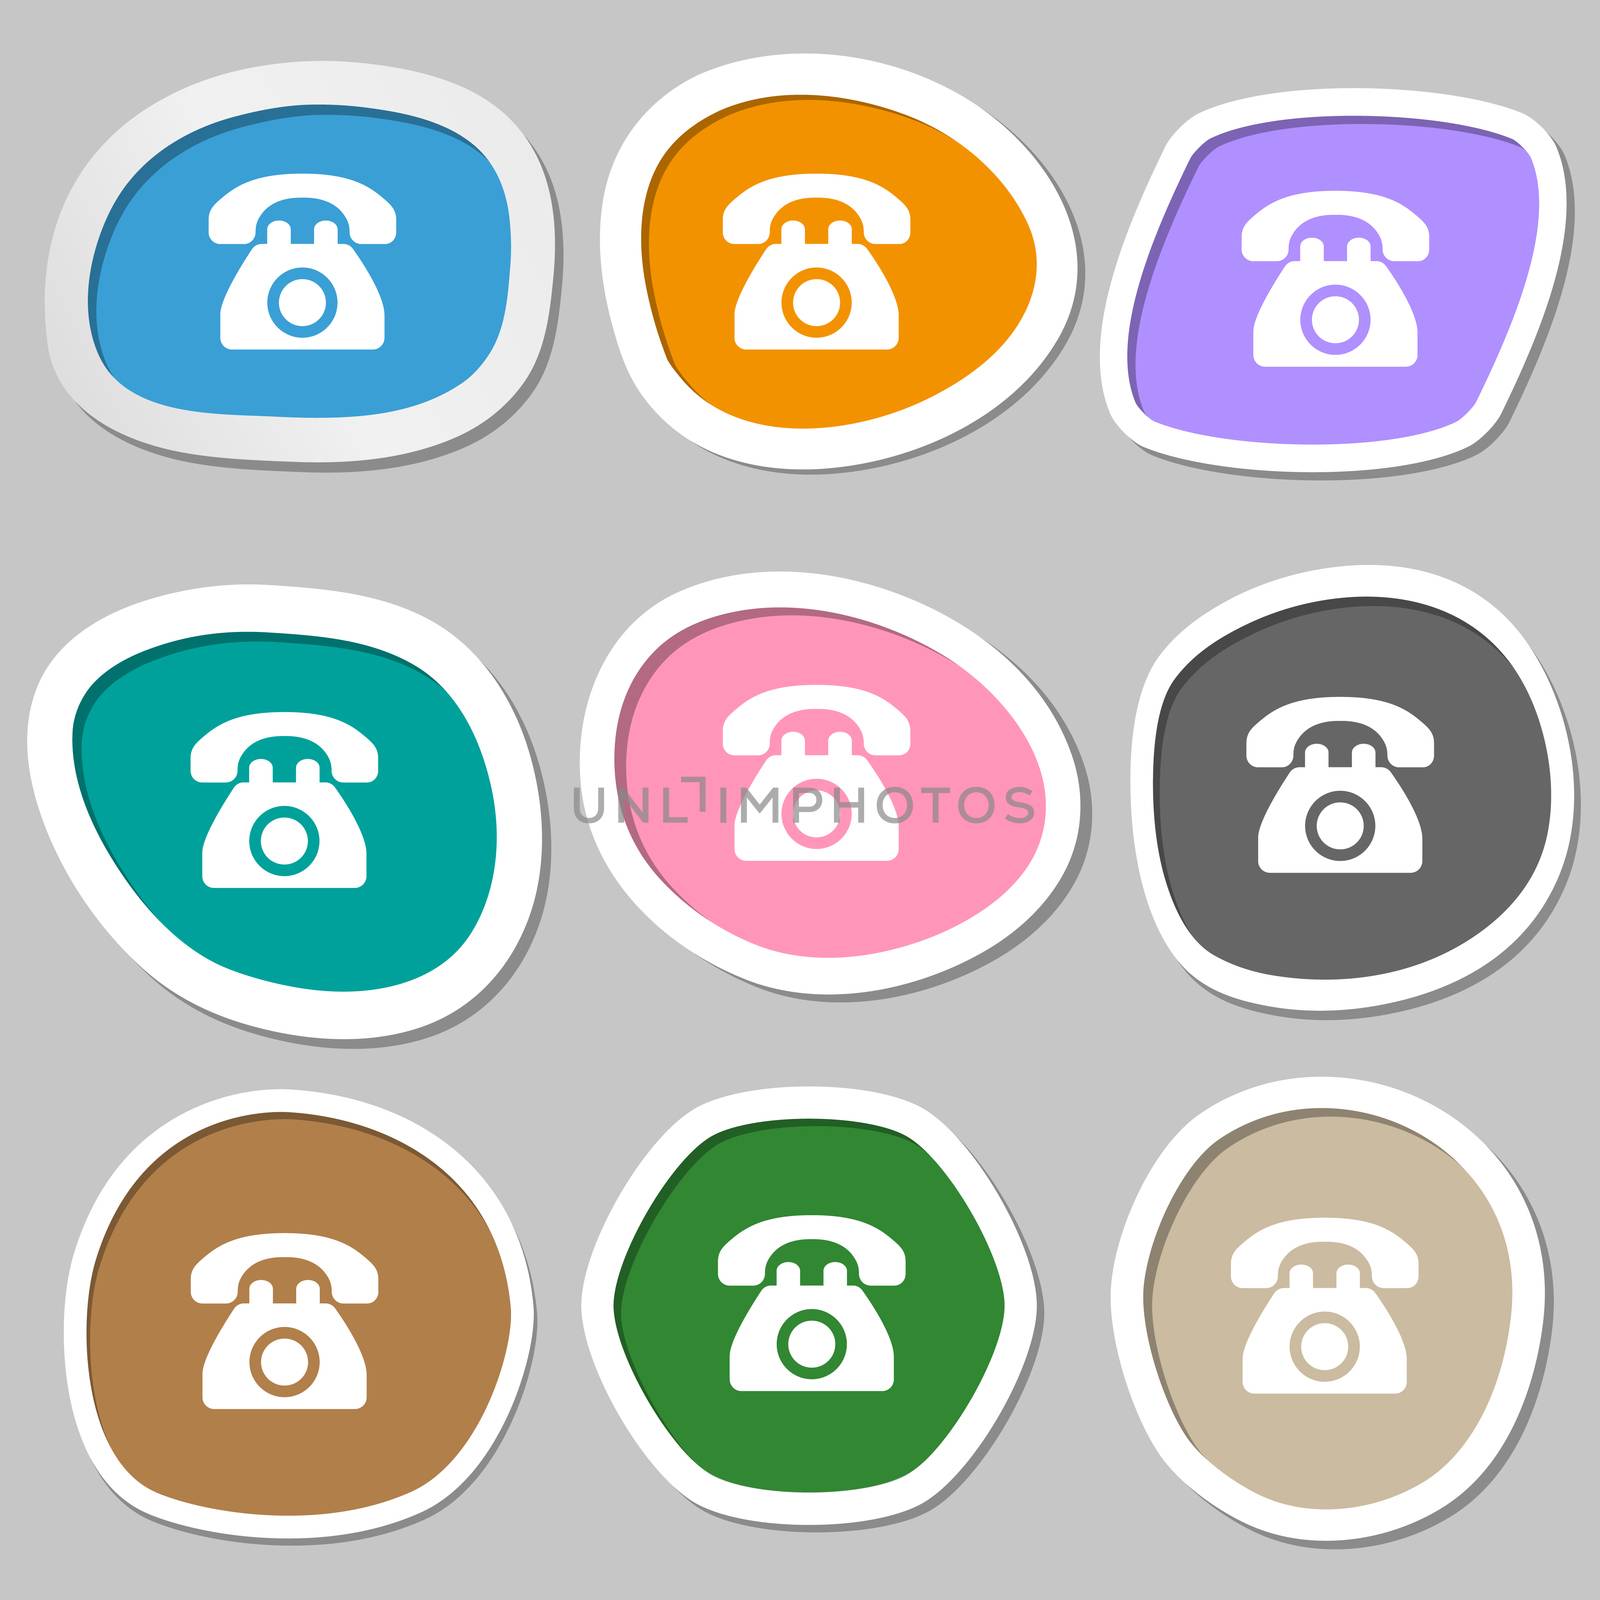 Retro telephone icon symbols. Multicolored paper stickers.  by serhii_lohvyniuk